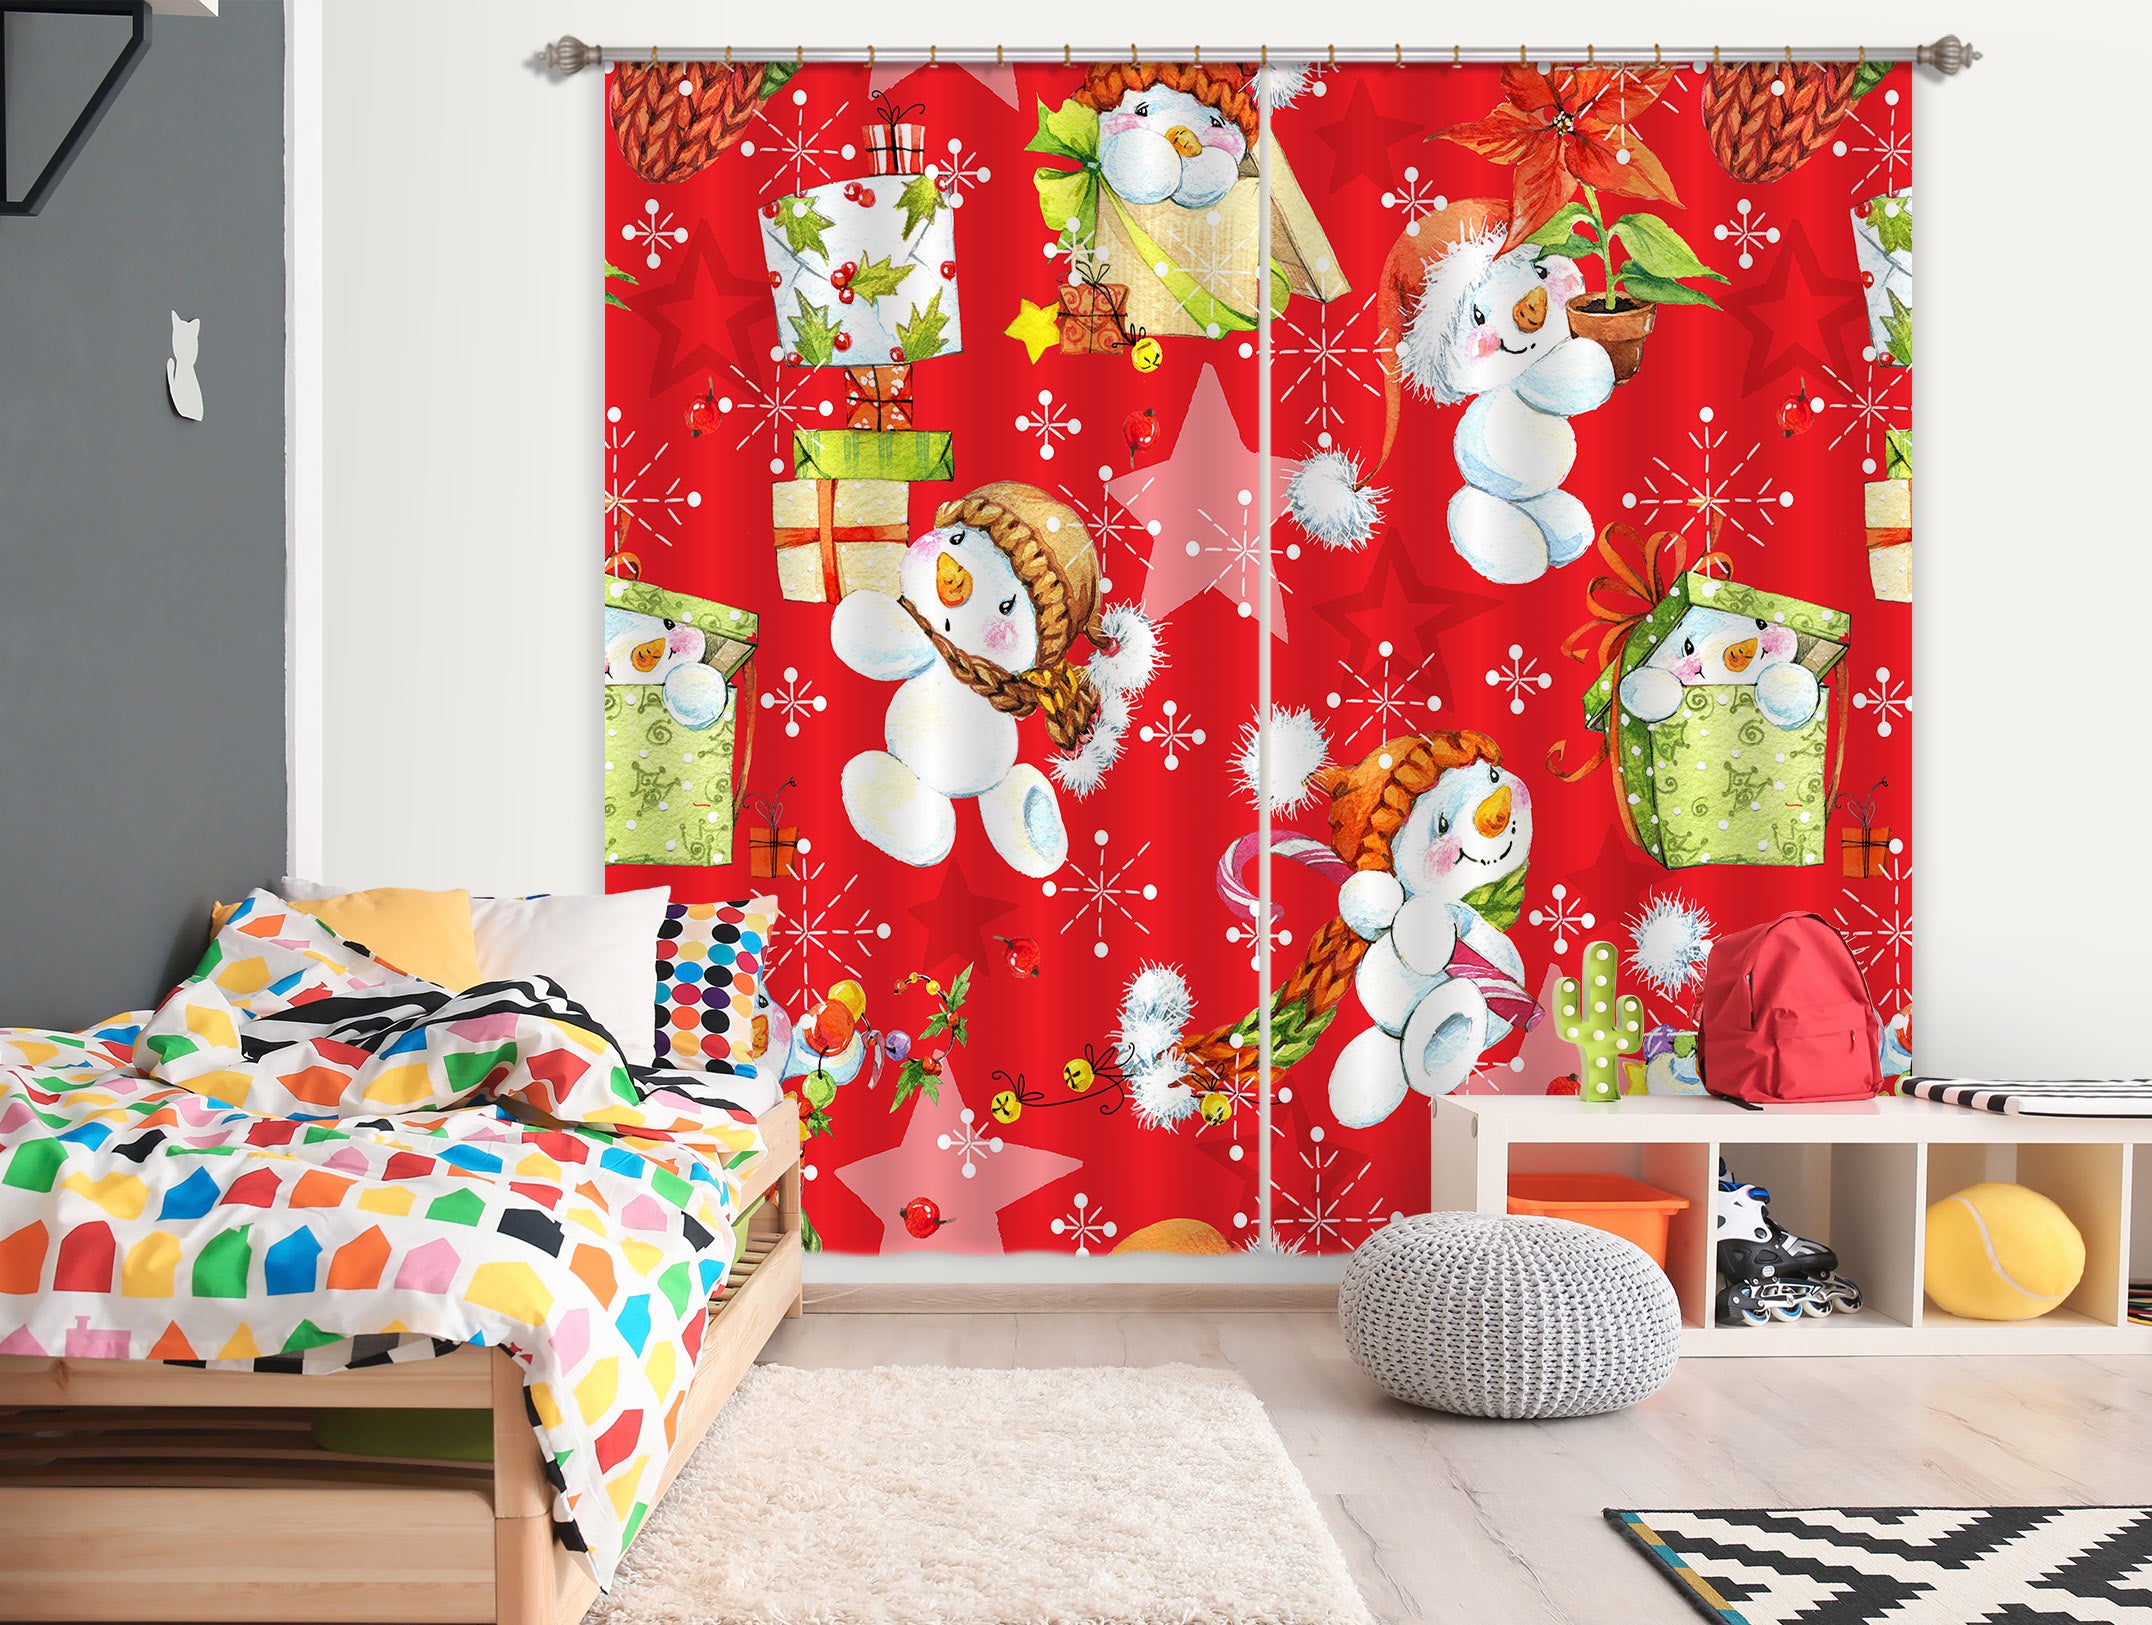 3D Snowman Doll Pattern 52030 Christmas Curtains Drapes Xmas